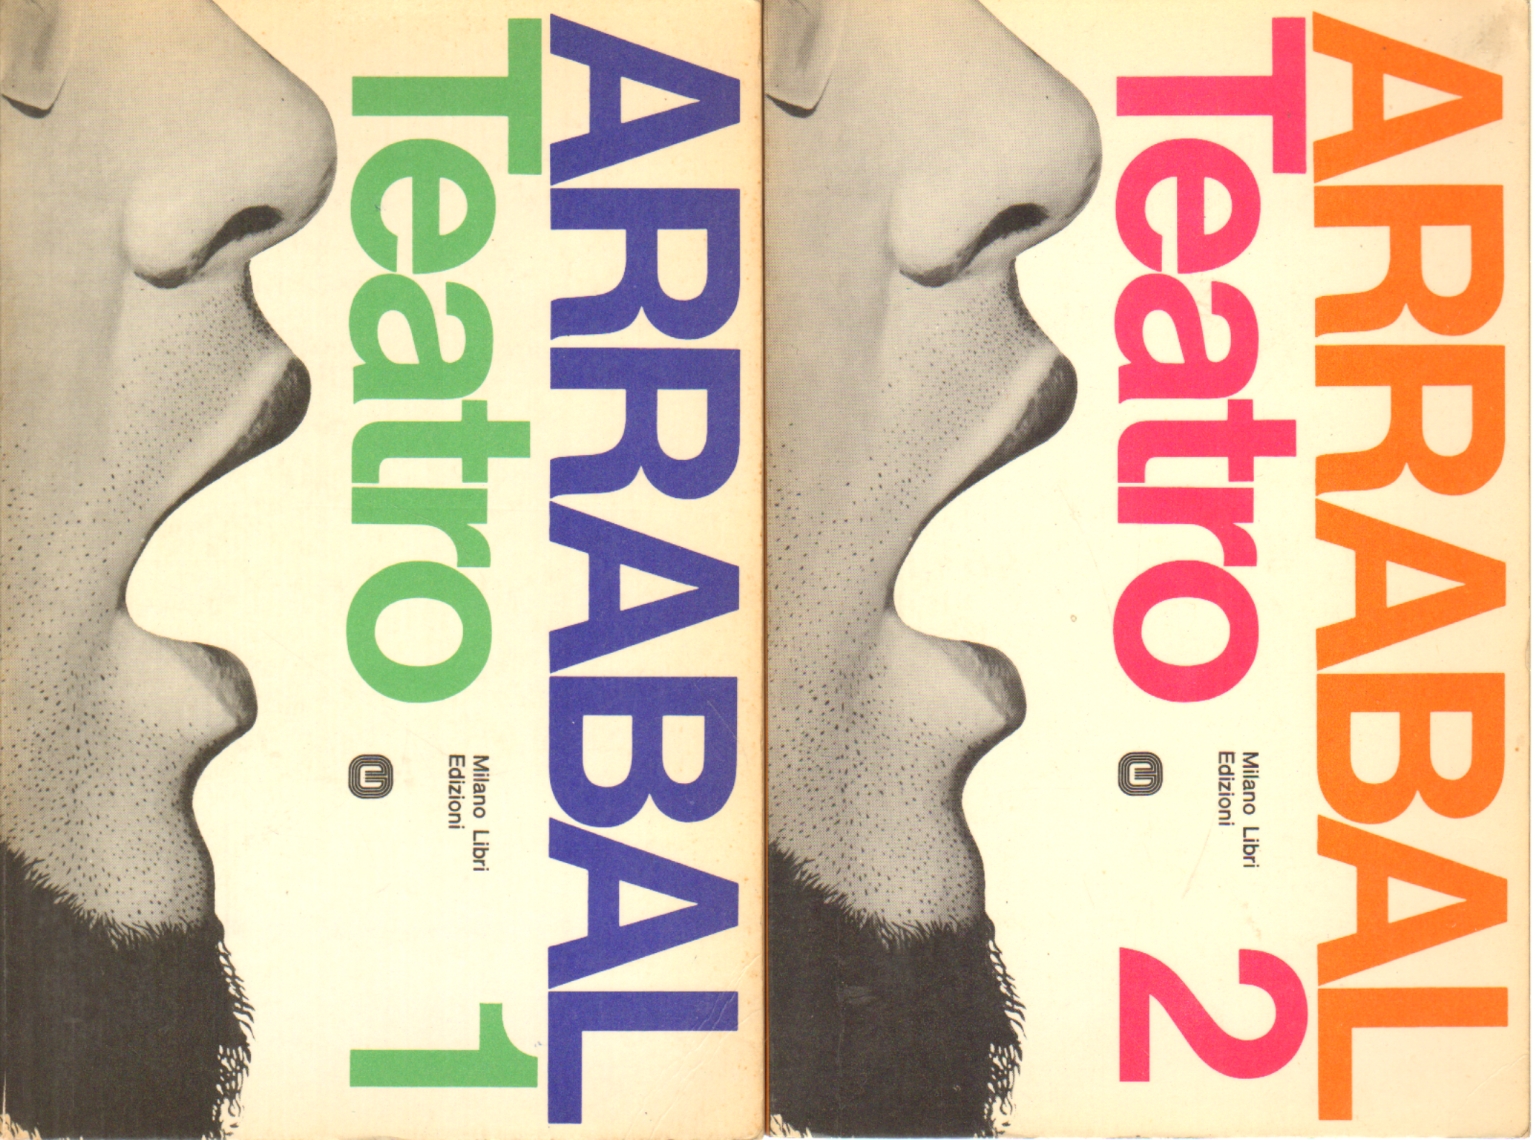 Théâtre (2 volumes), Arrabal